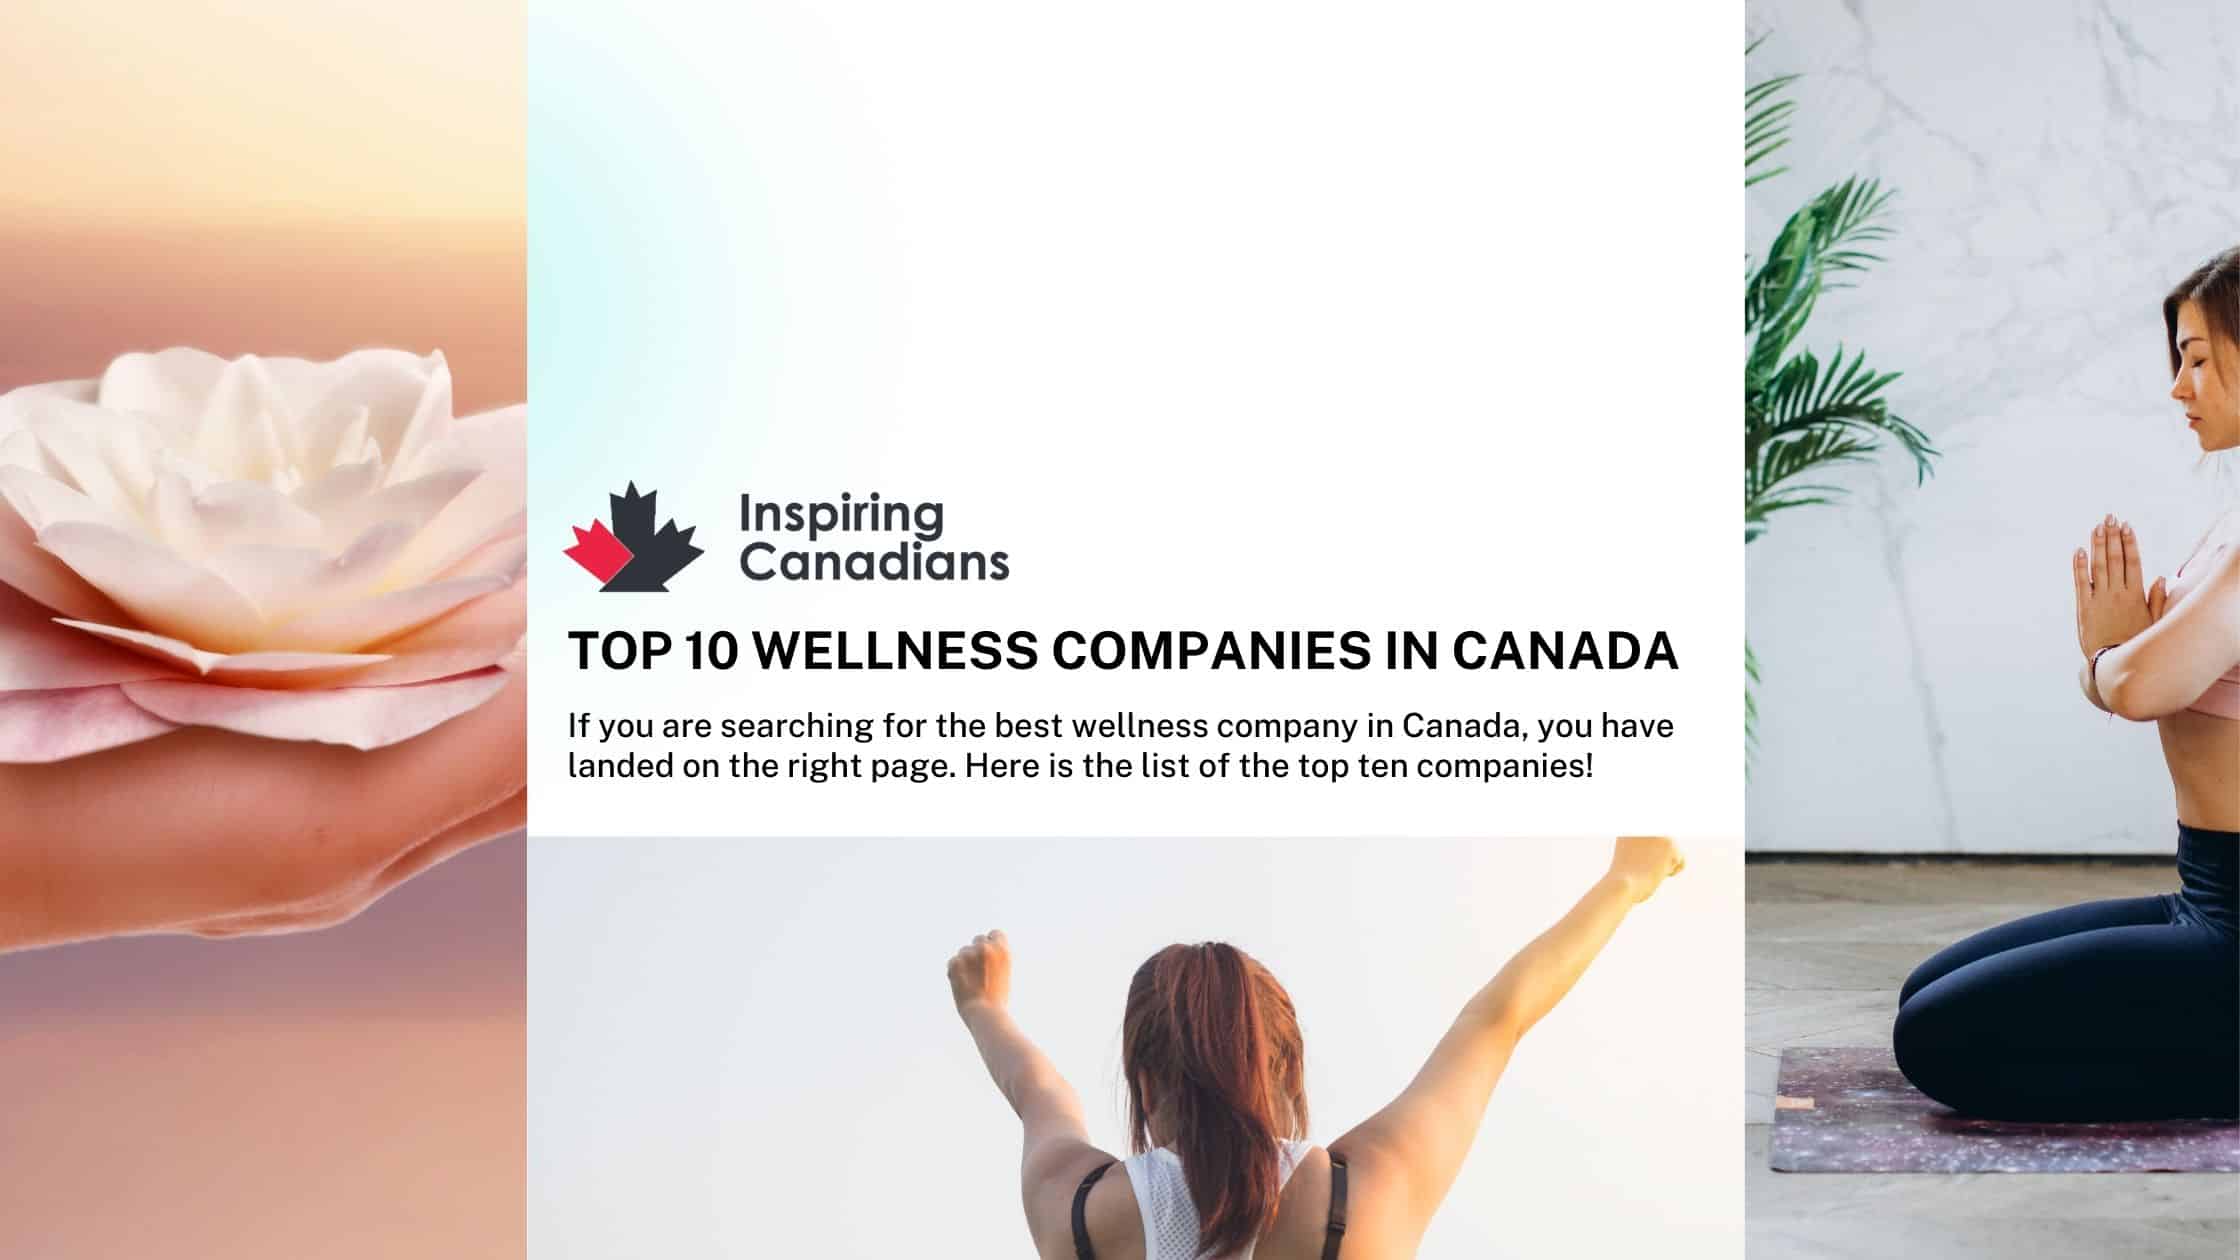 Top 10 wellness companies in Canada